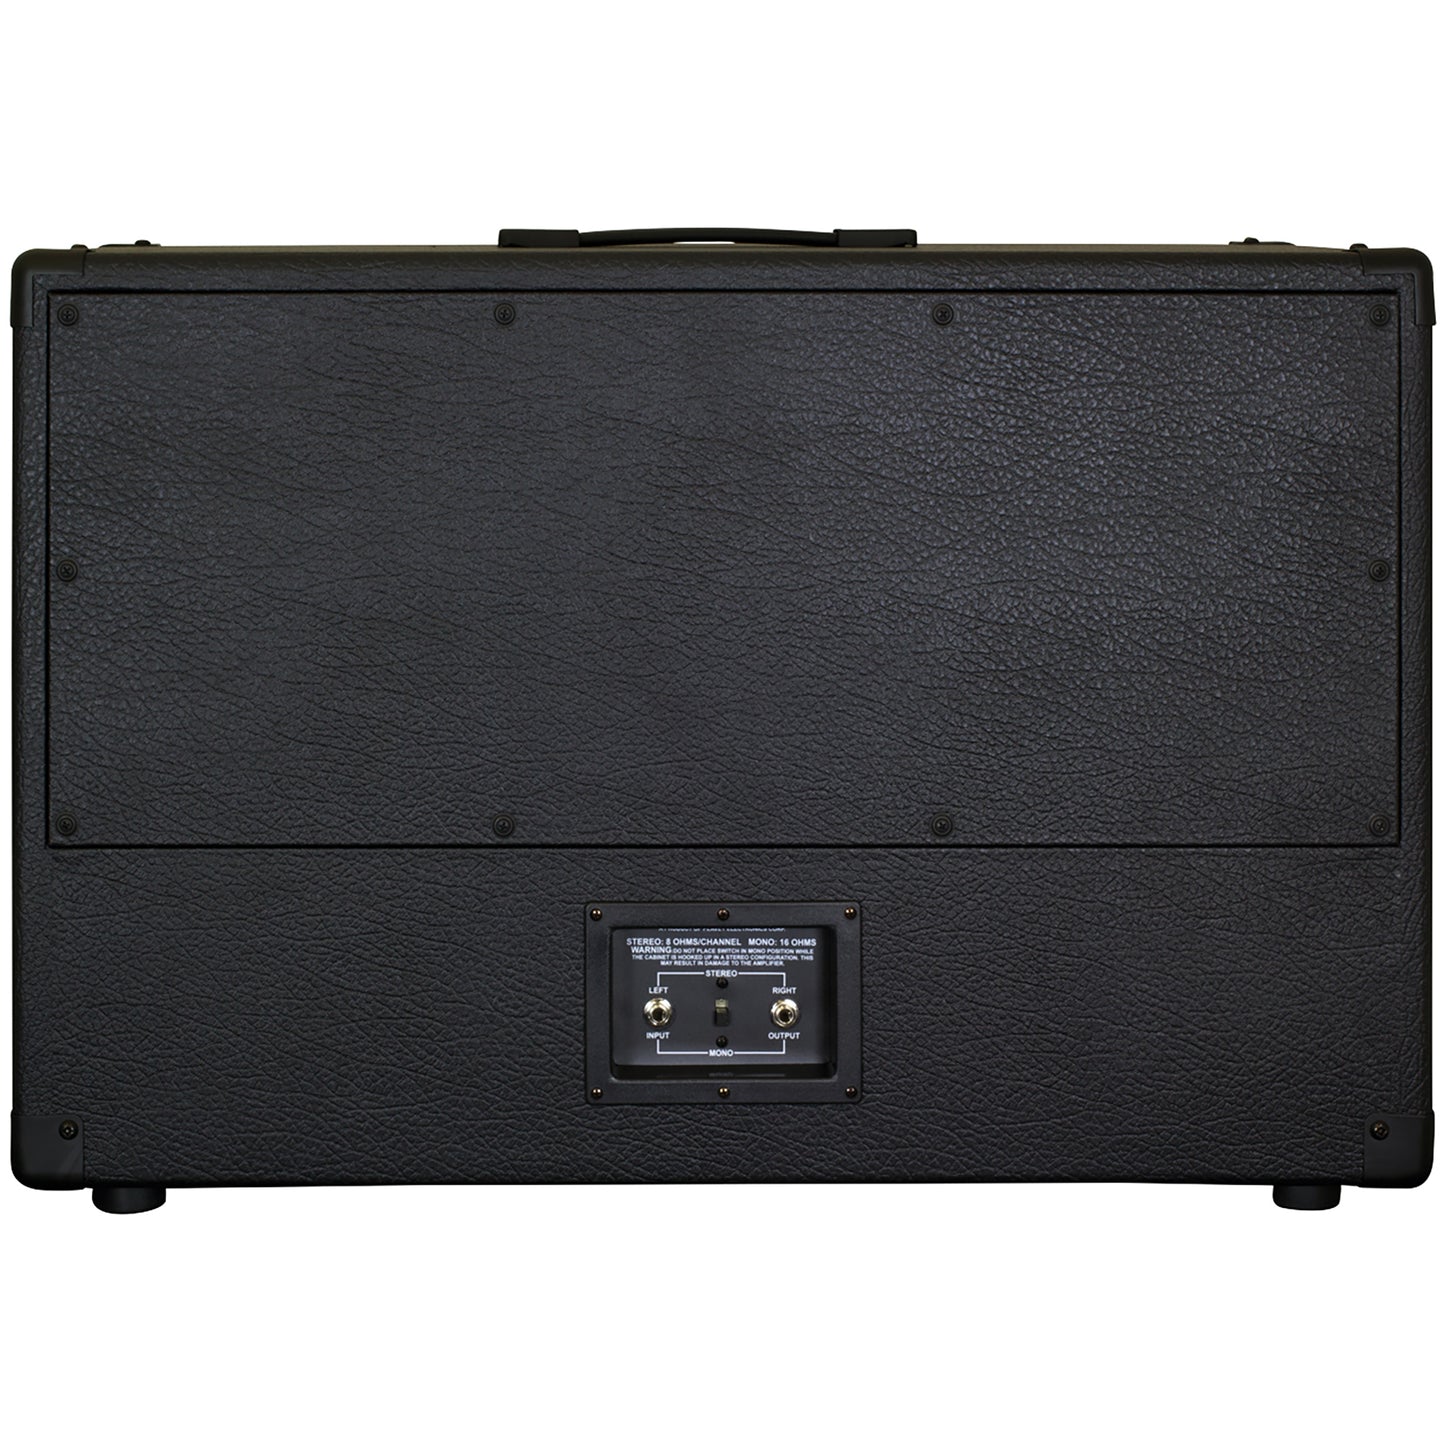 Peavy 212-6 2x12” Cabinet in Black